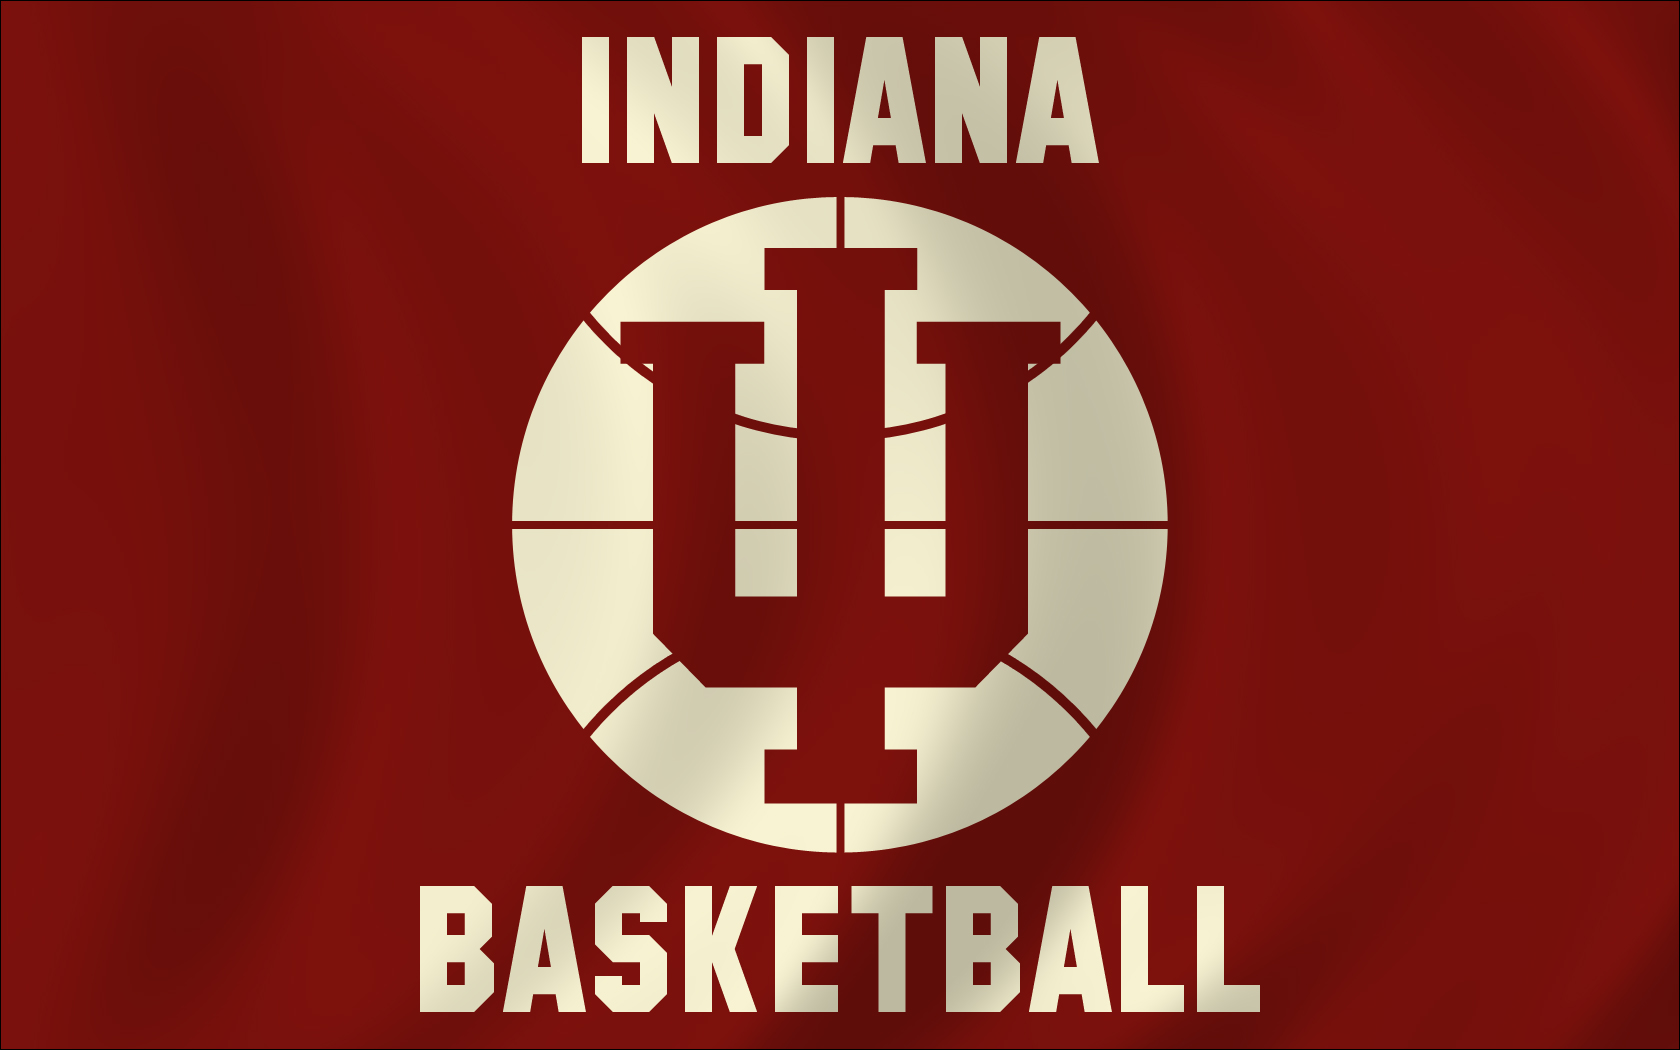 Indiana Basketball Flag By Monkeybiziu